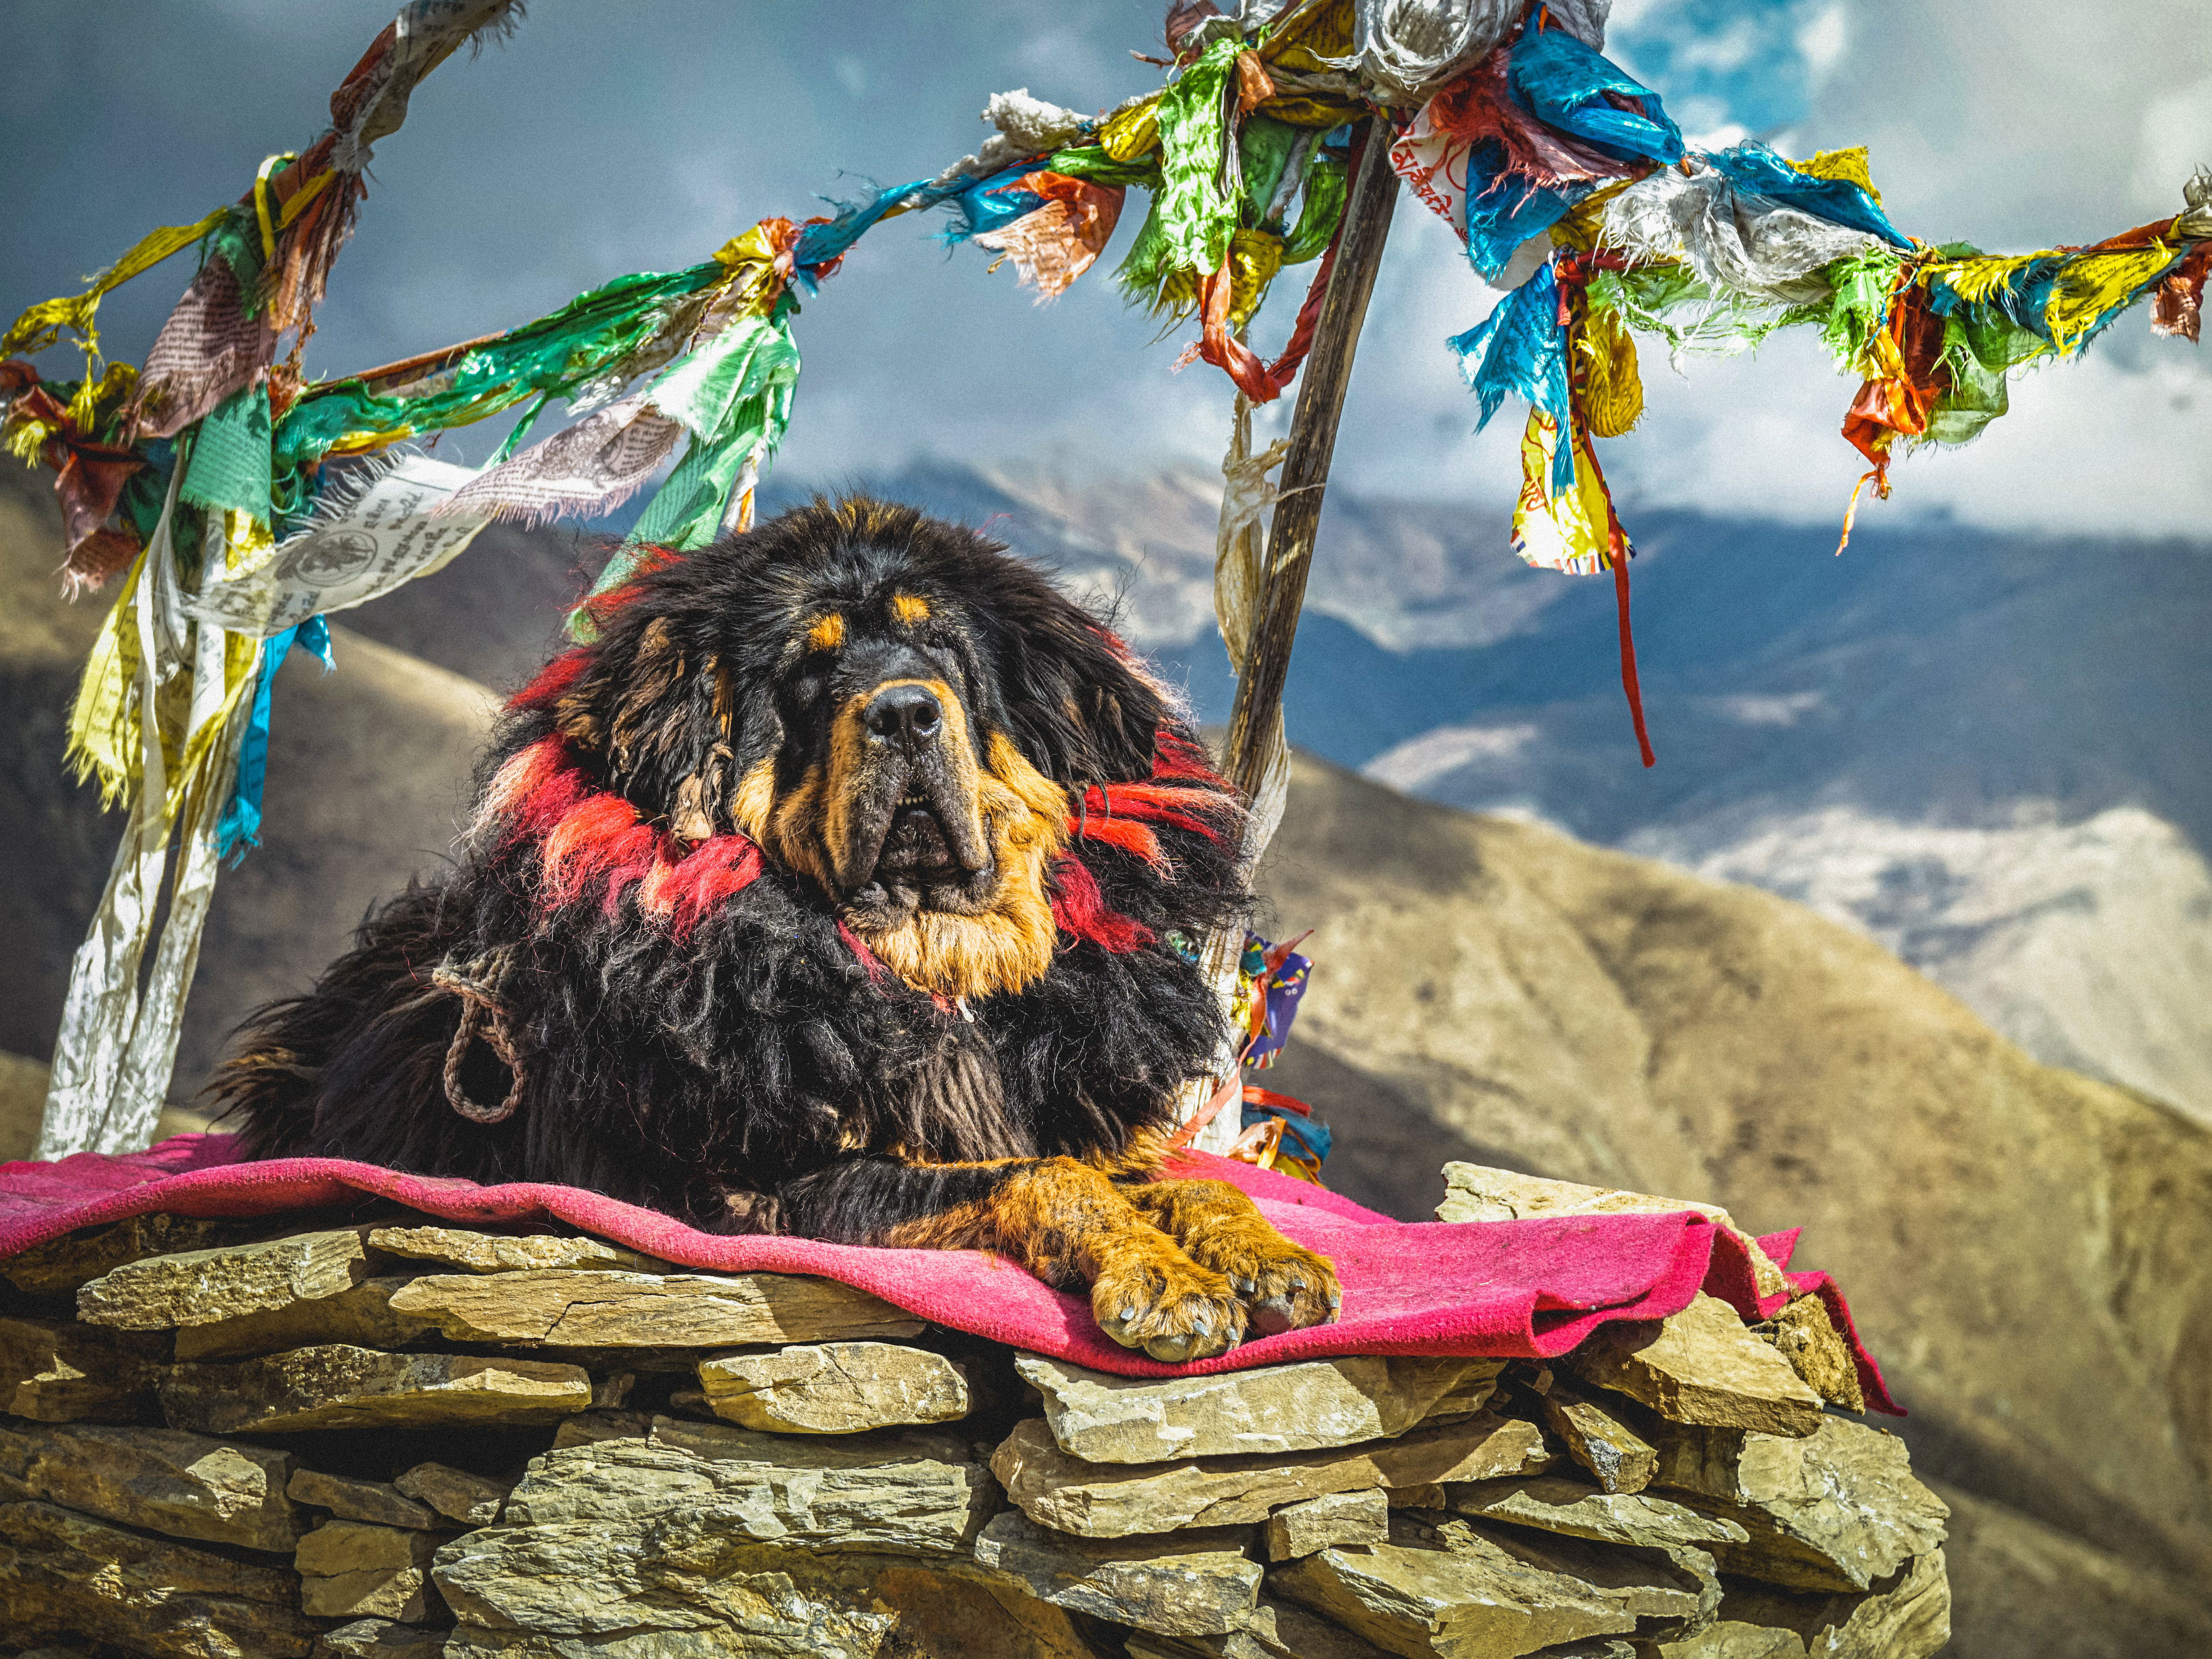 tibetan mastiff dog resting on the blanket on stones